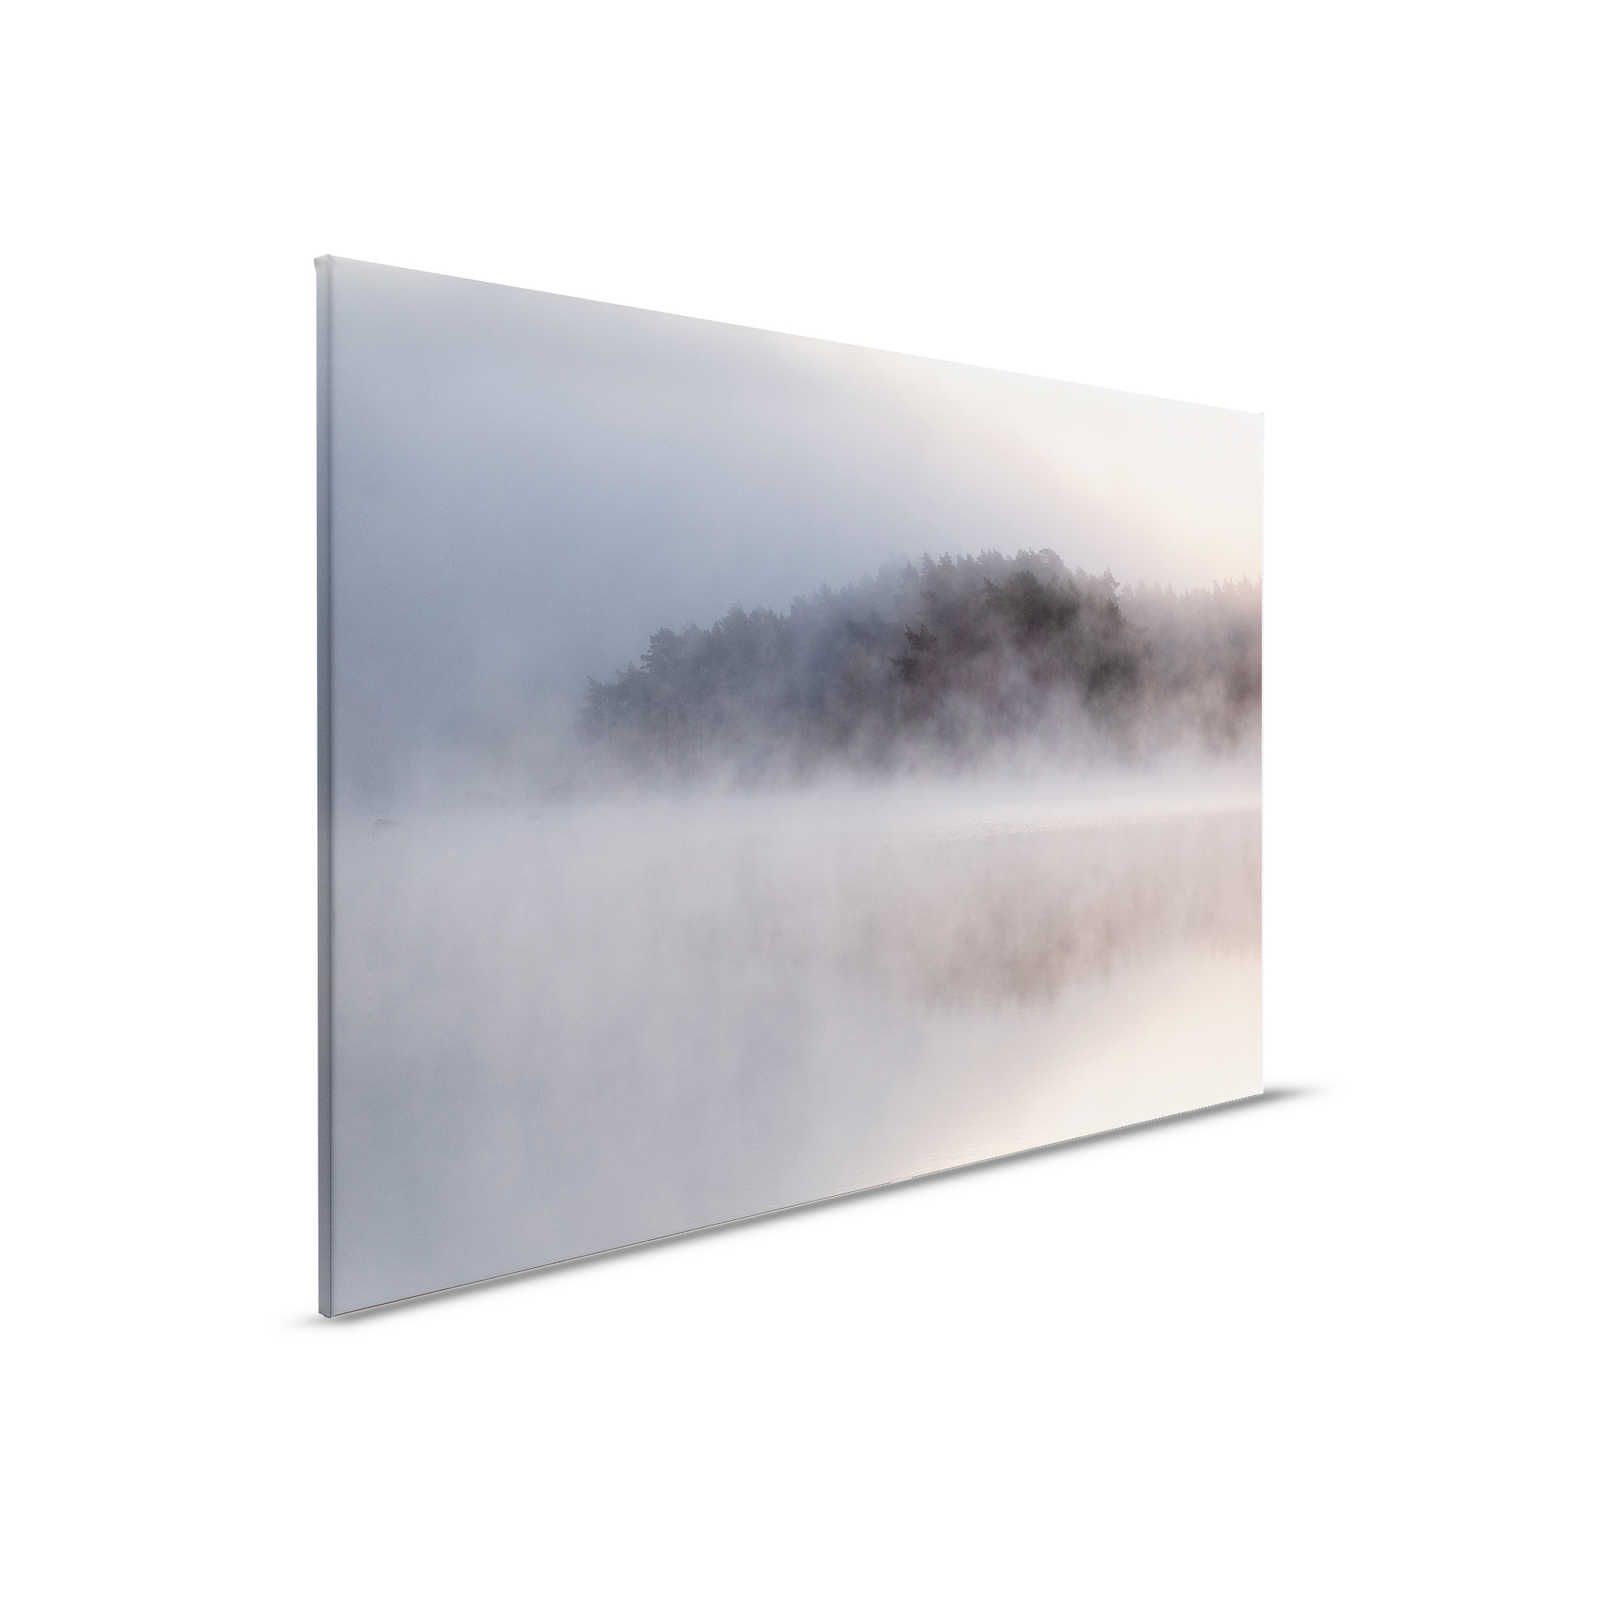         Avalon 1 - Canvas painting Landscape at dawn - 0,90 m x 0,60 m
    